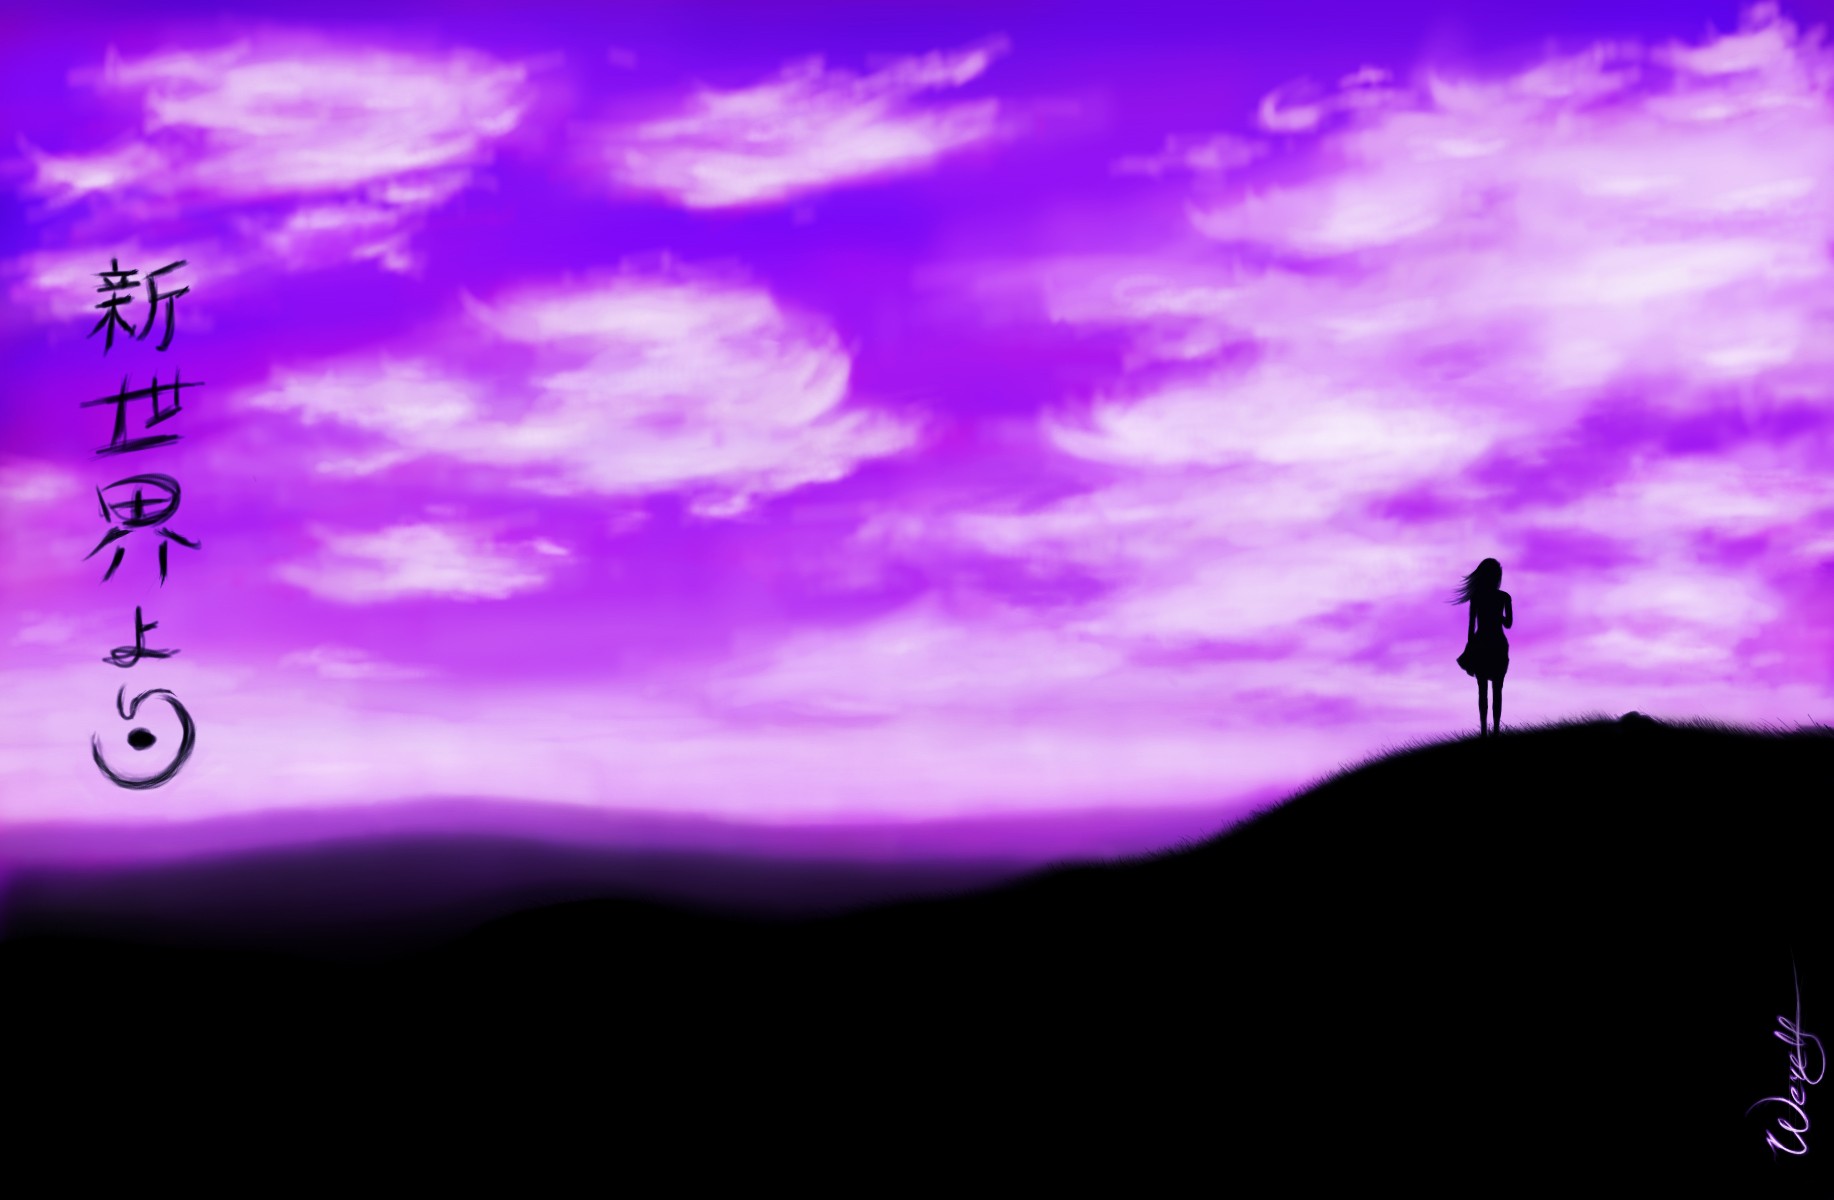 Anime 1834x1200 landscape digital art Shinsekai Yori anime girls anime alone standing women outdoors purple sky sky clouds silhouette